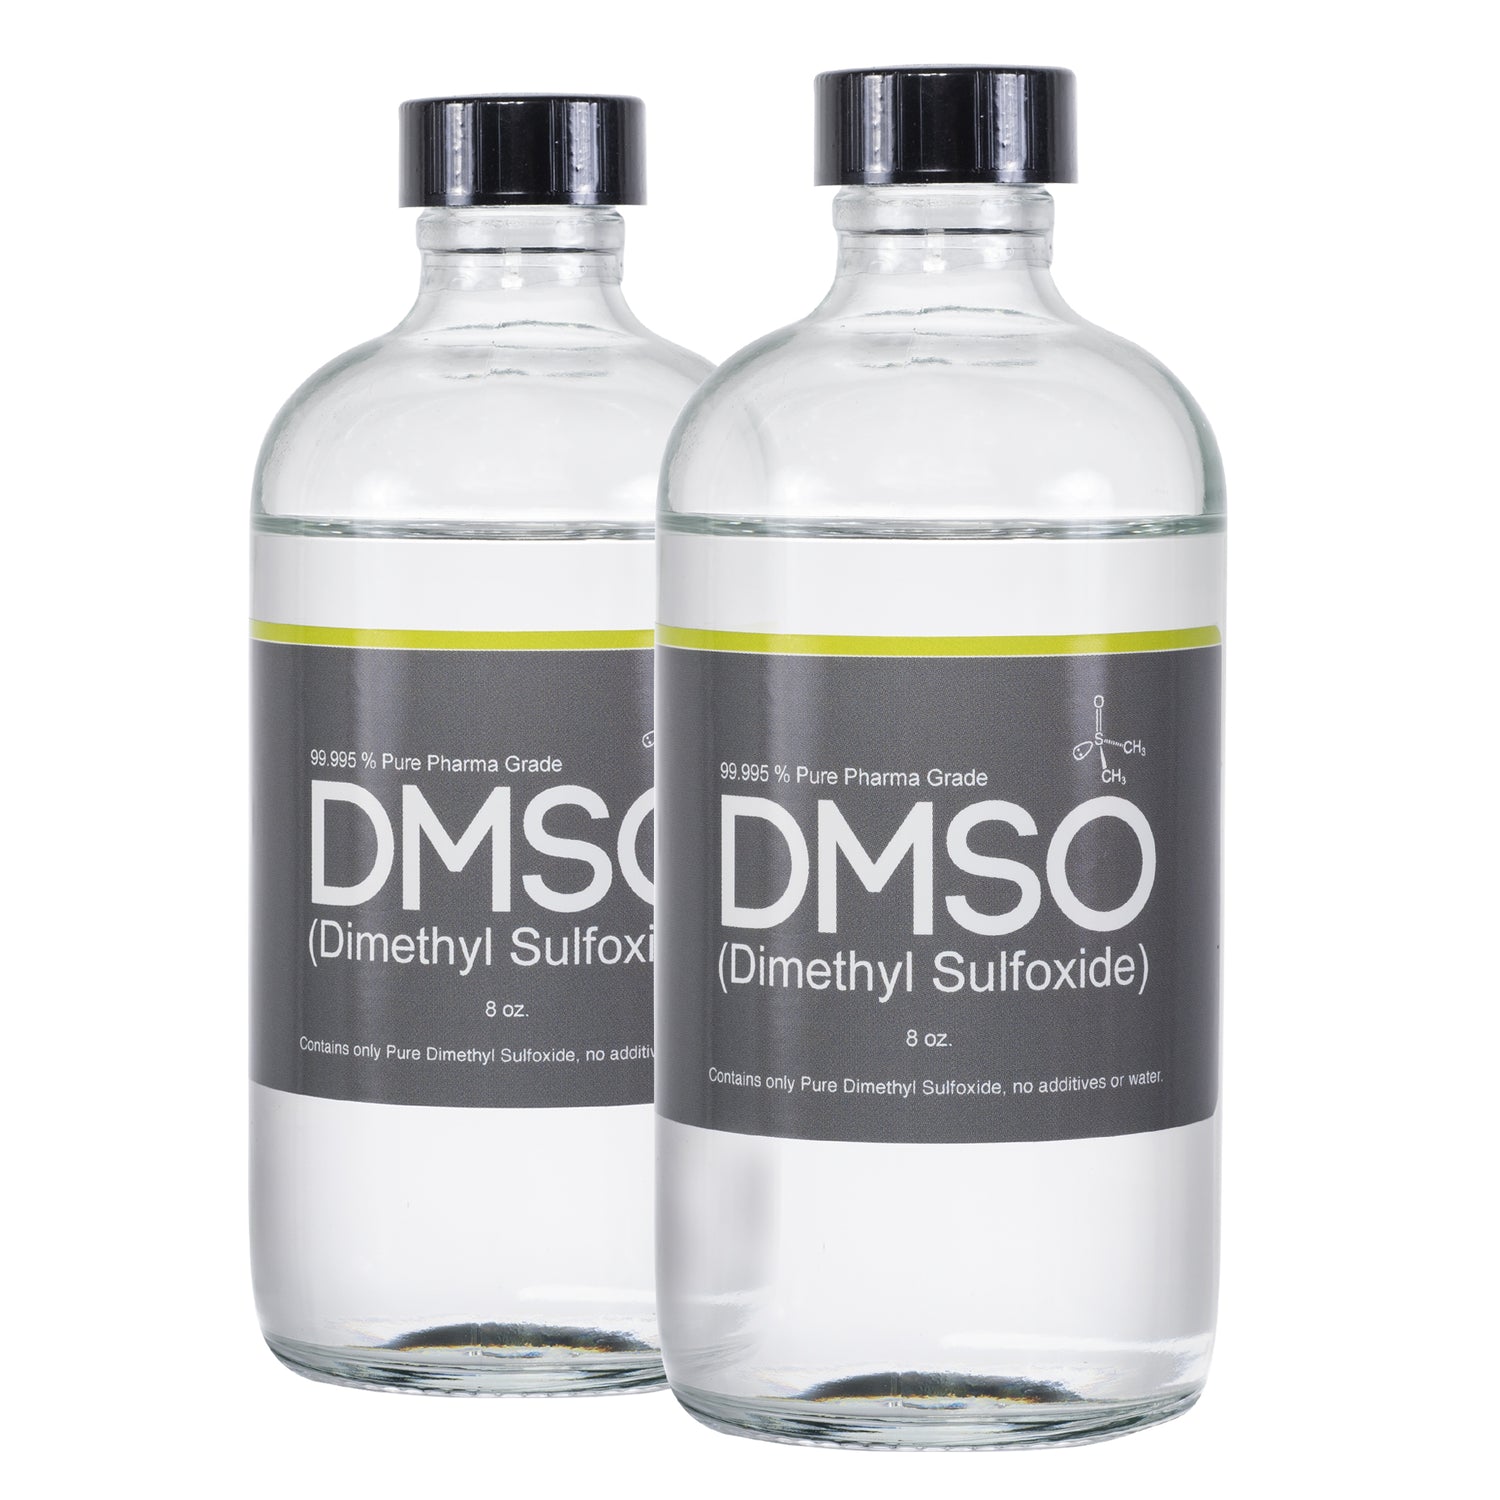 Premium Pharma Grade DMSO.